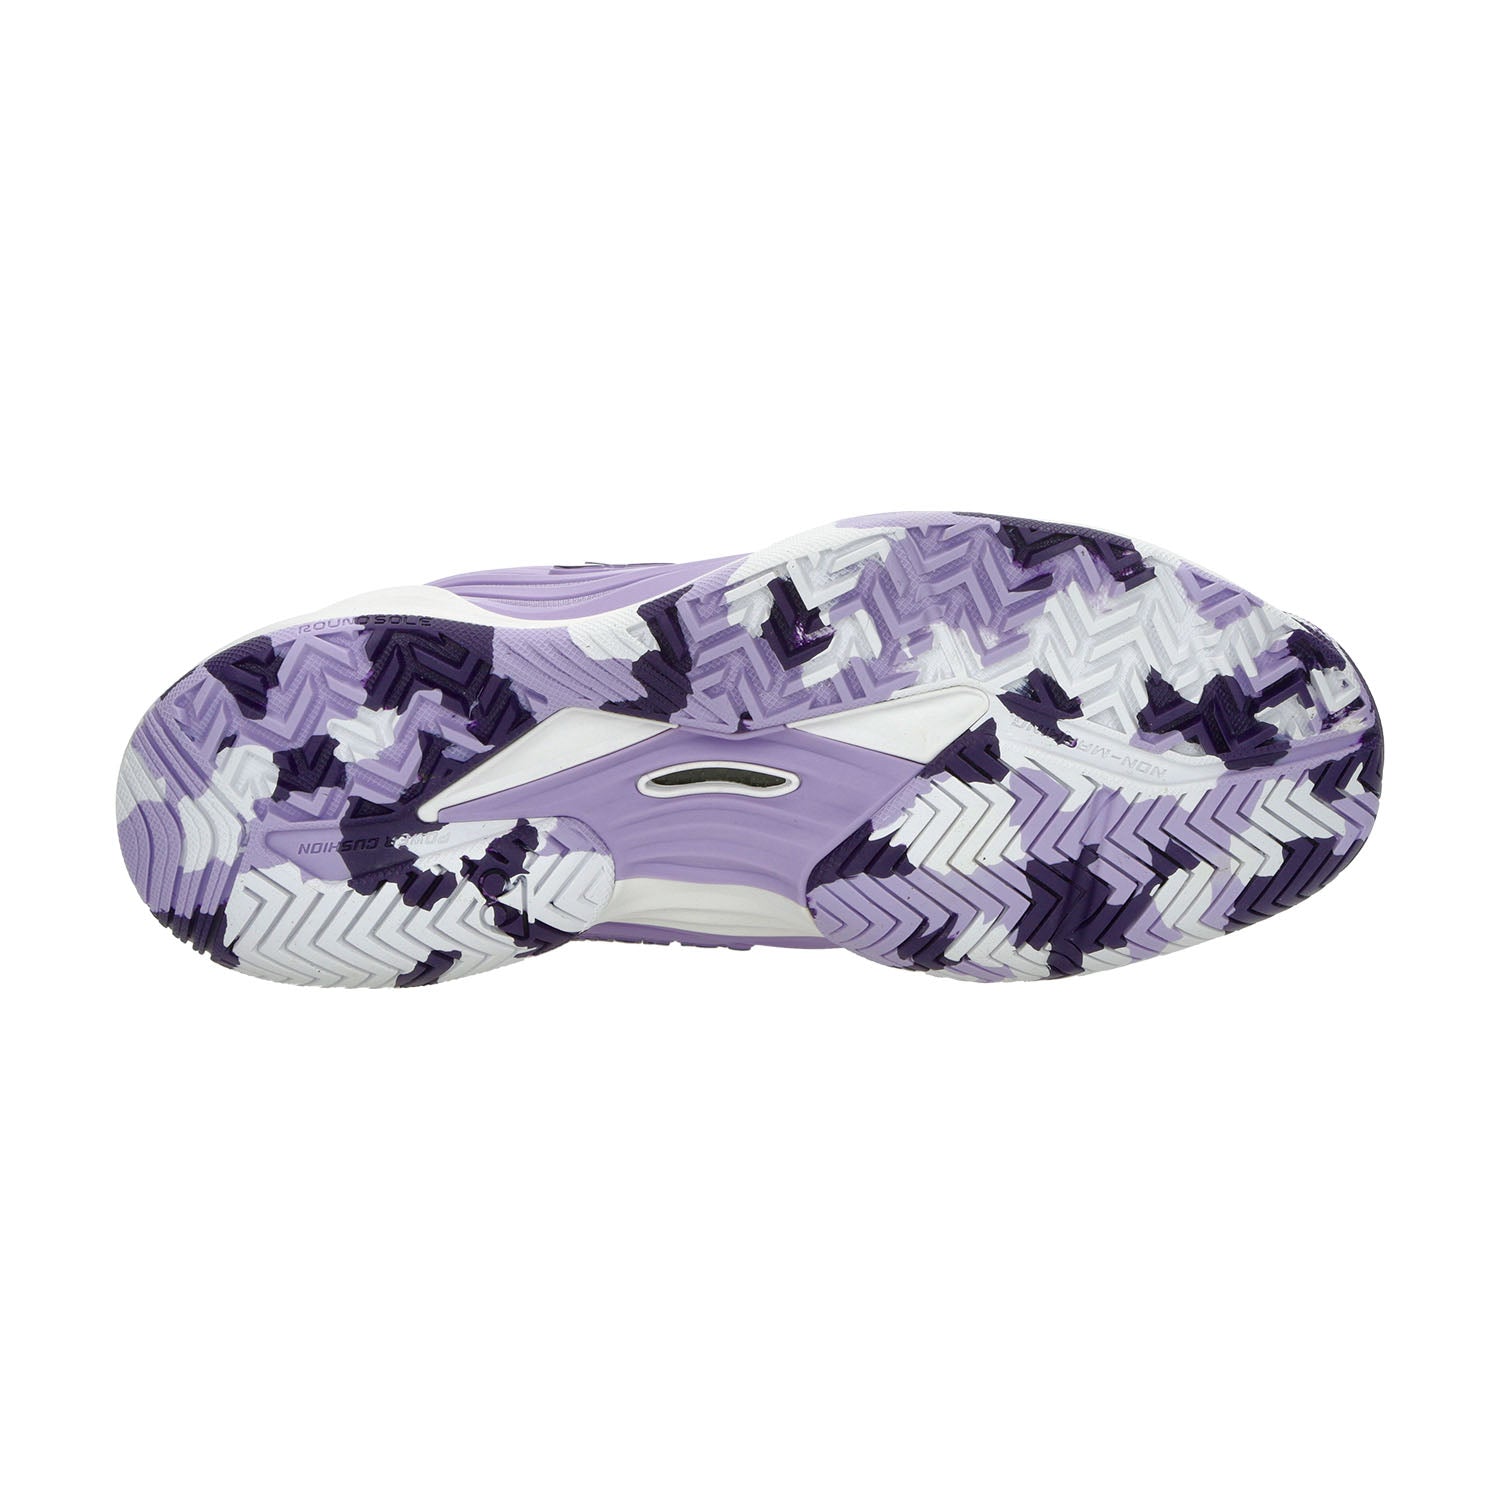 Tenis Yonex Power Cushion Fusionrev 5 Dama (Mist Purple)